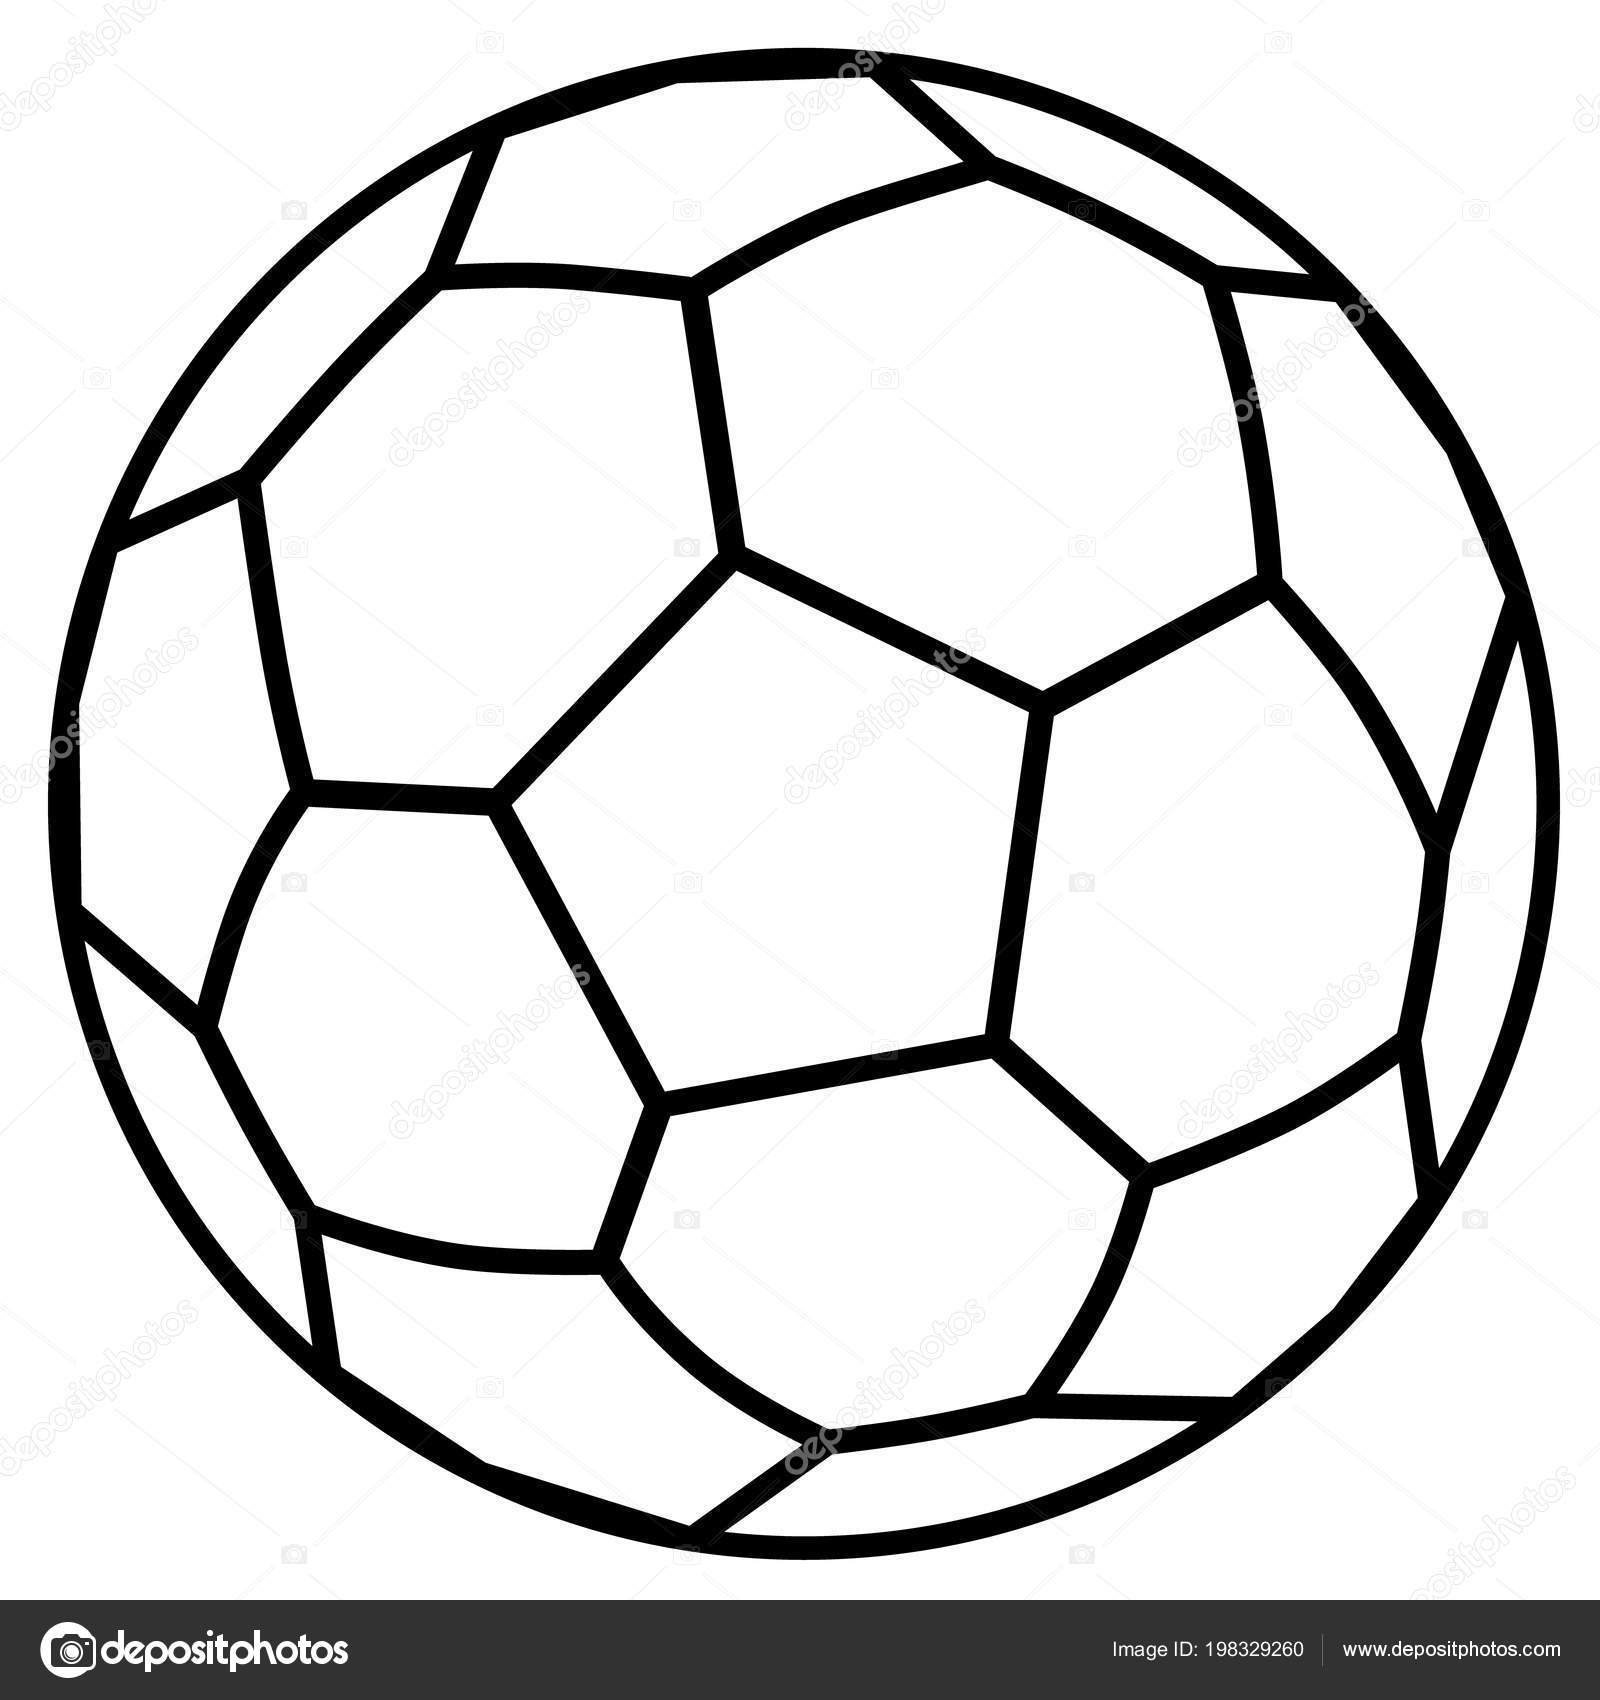 soccer-ball-colouring-page-farmihomie